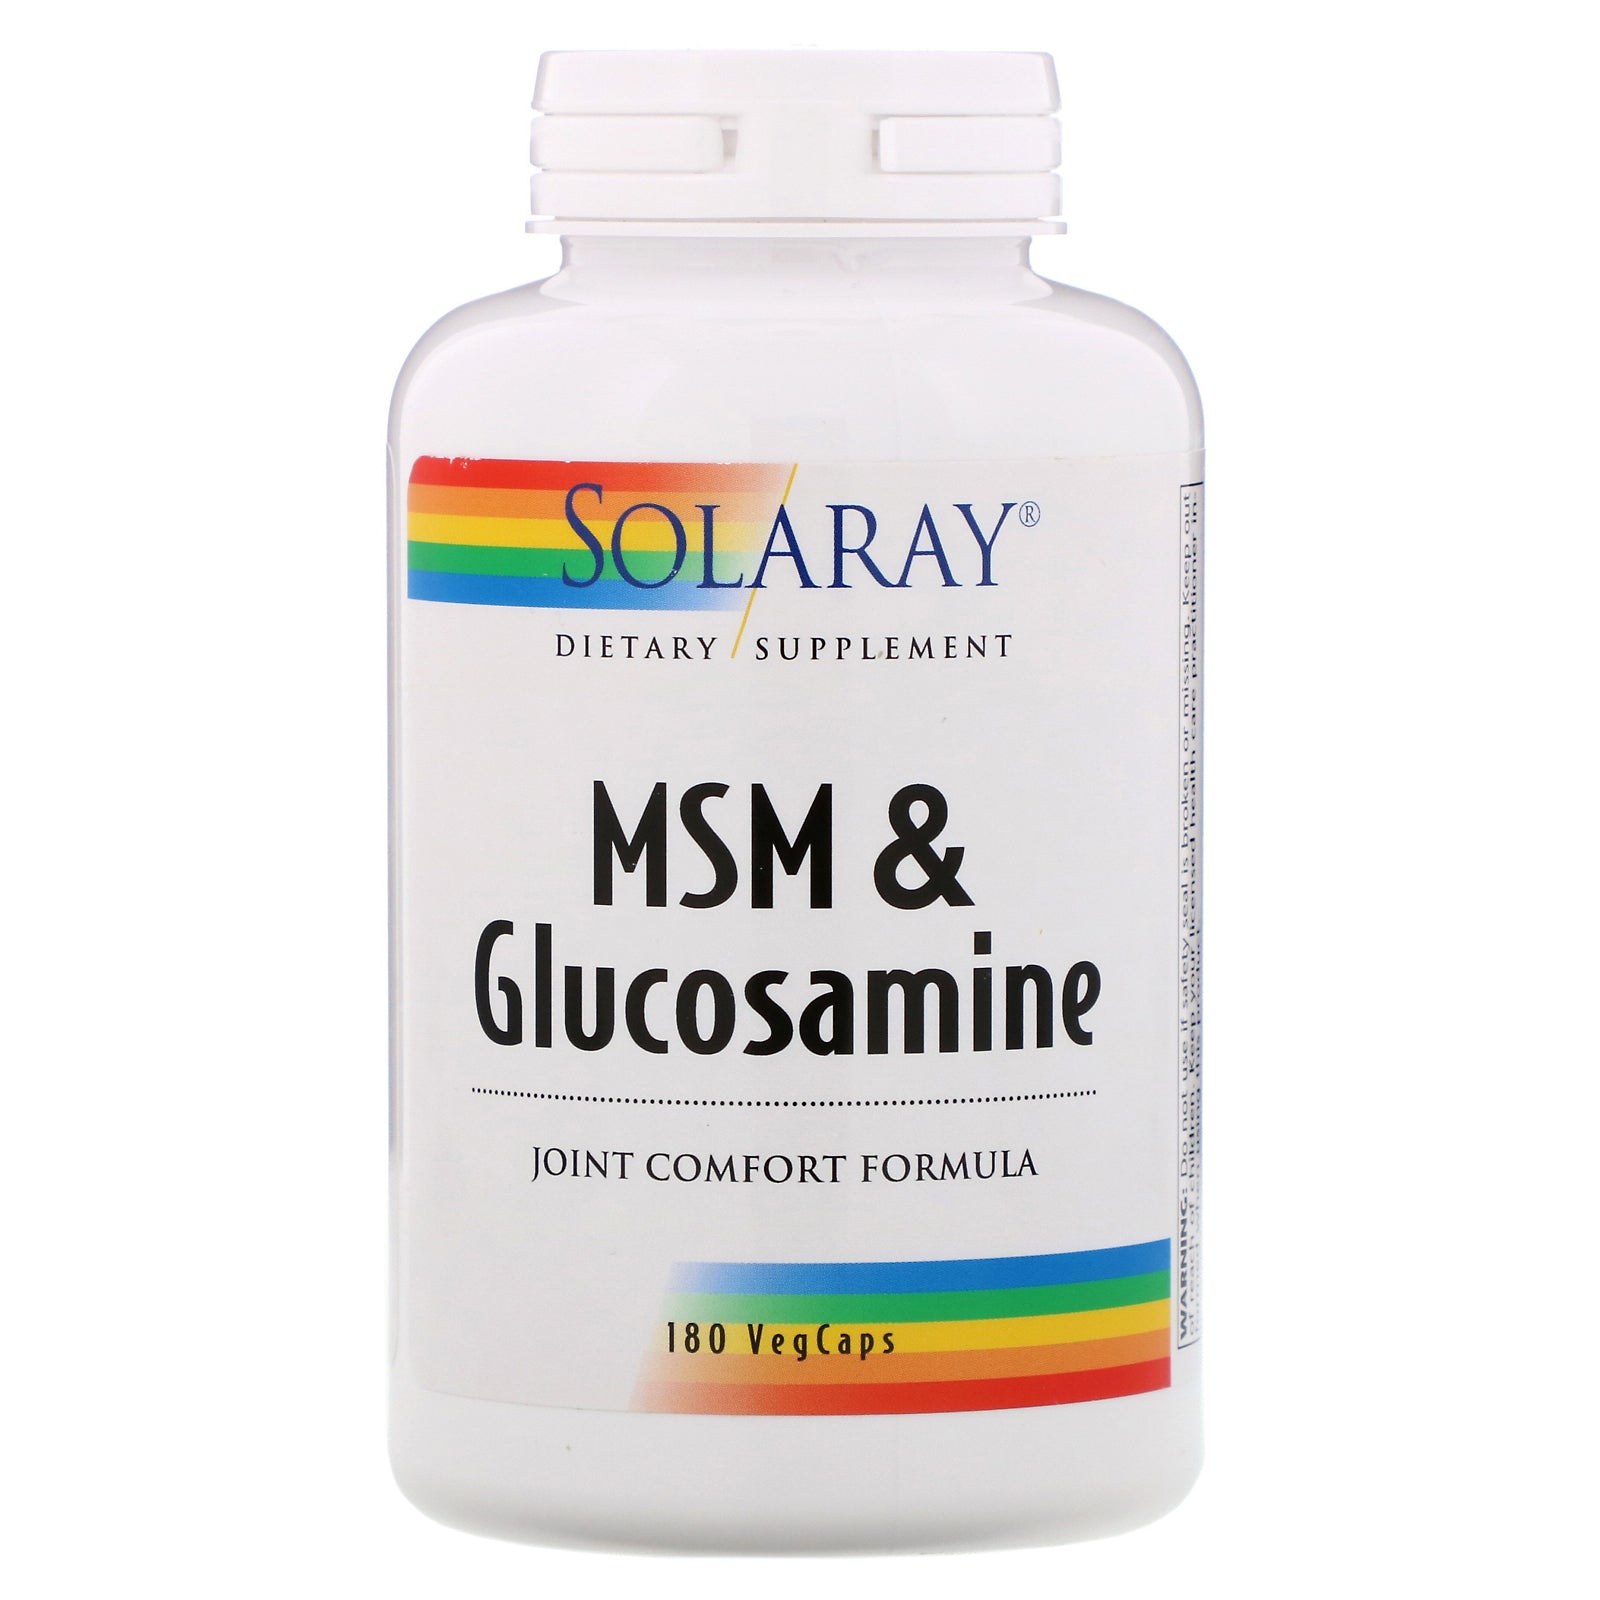 Solaray, MSM & Glucosamine , 180 VegCaps